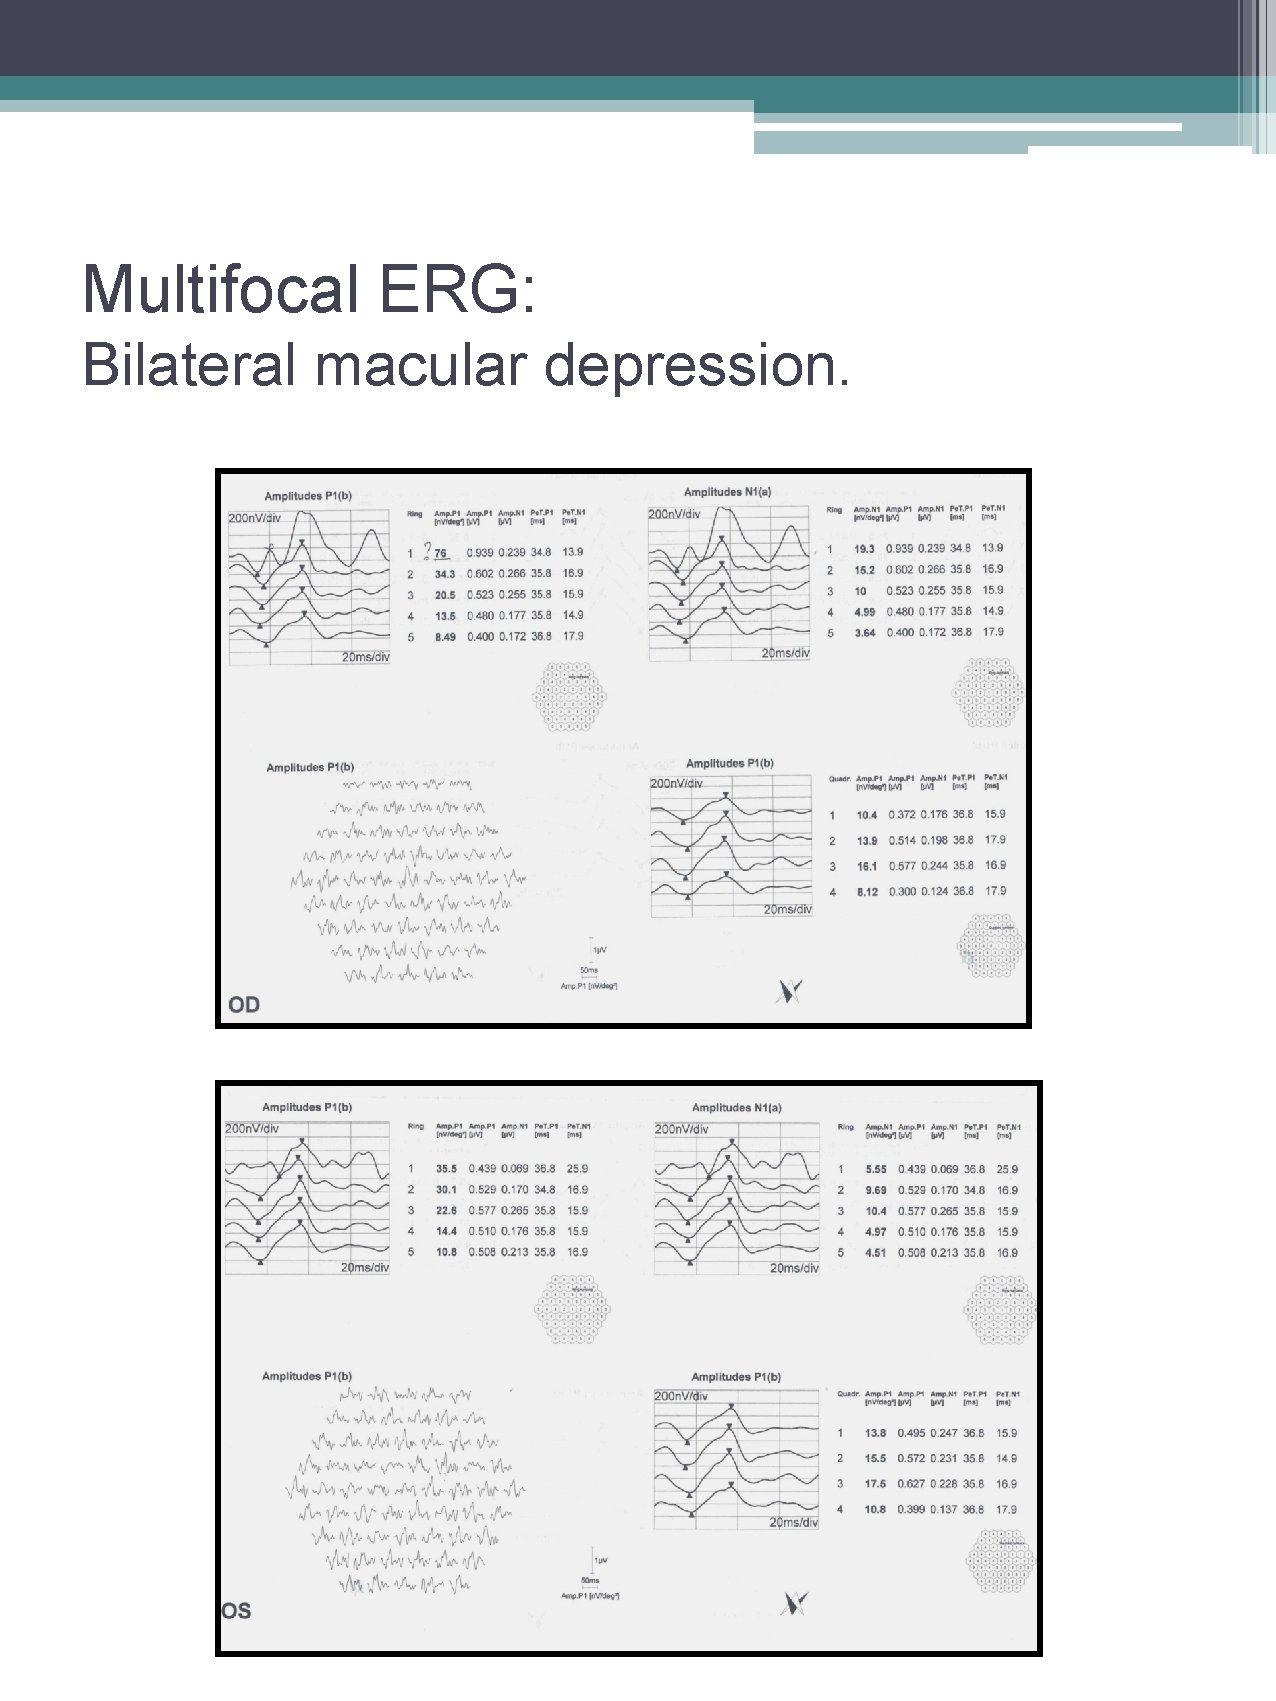 Multifocal ERG: Bilateral macular depression. 